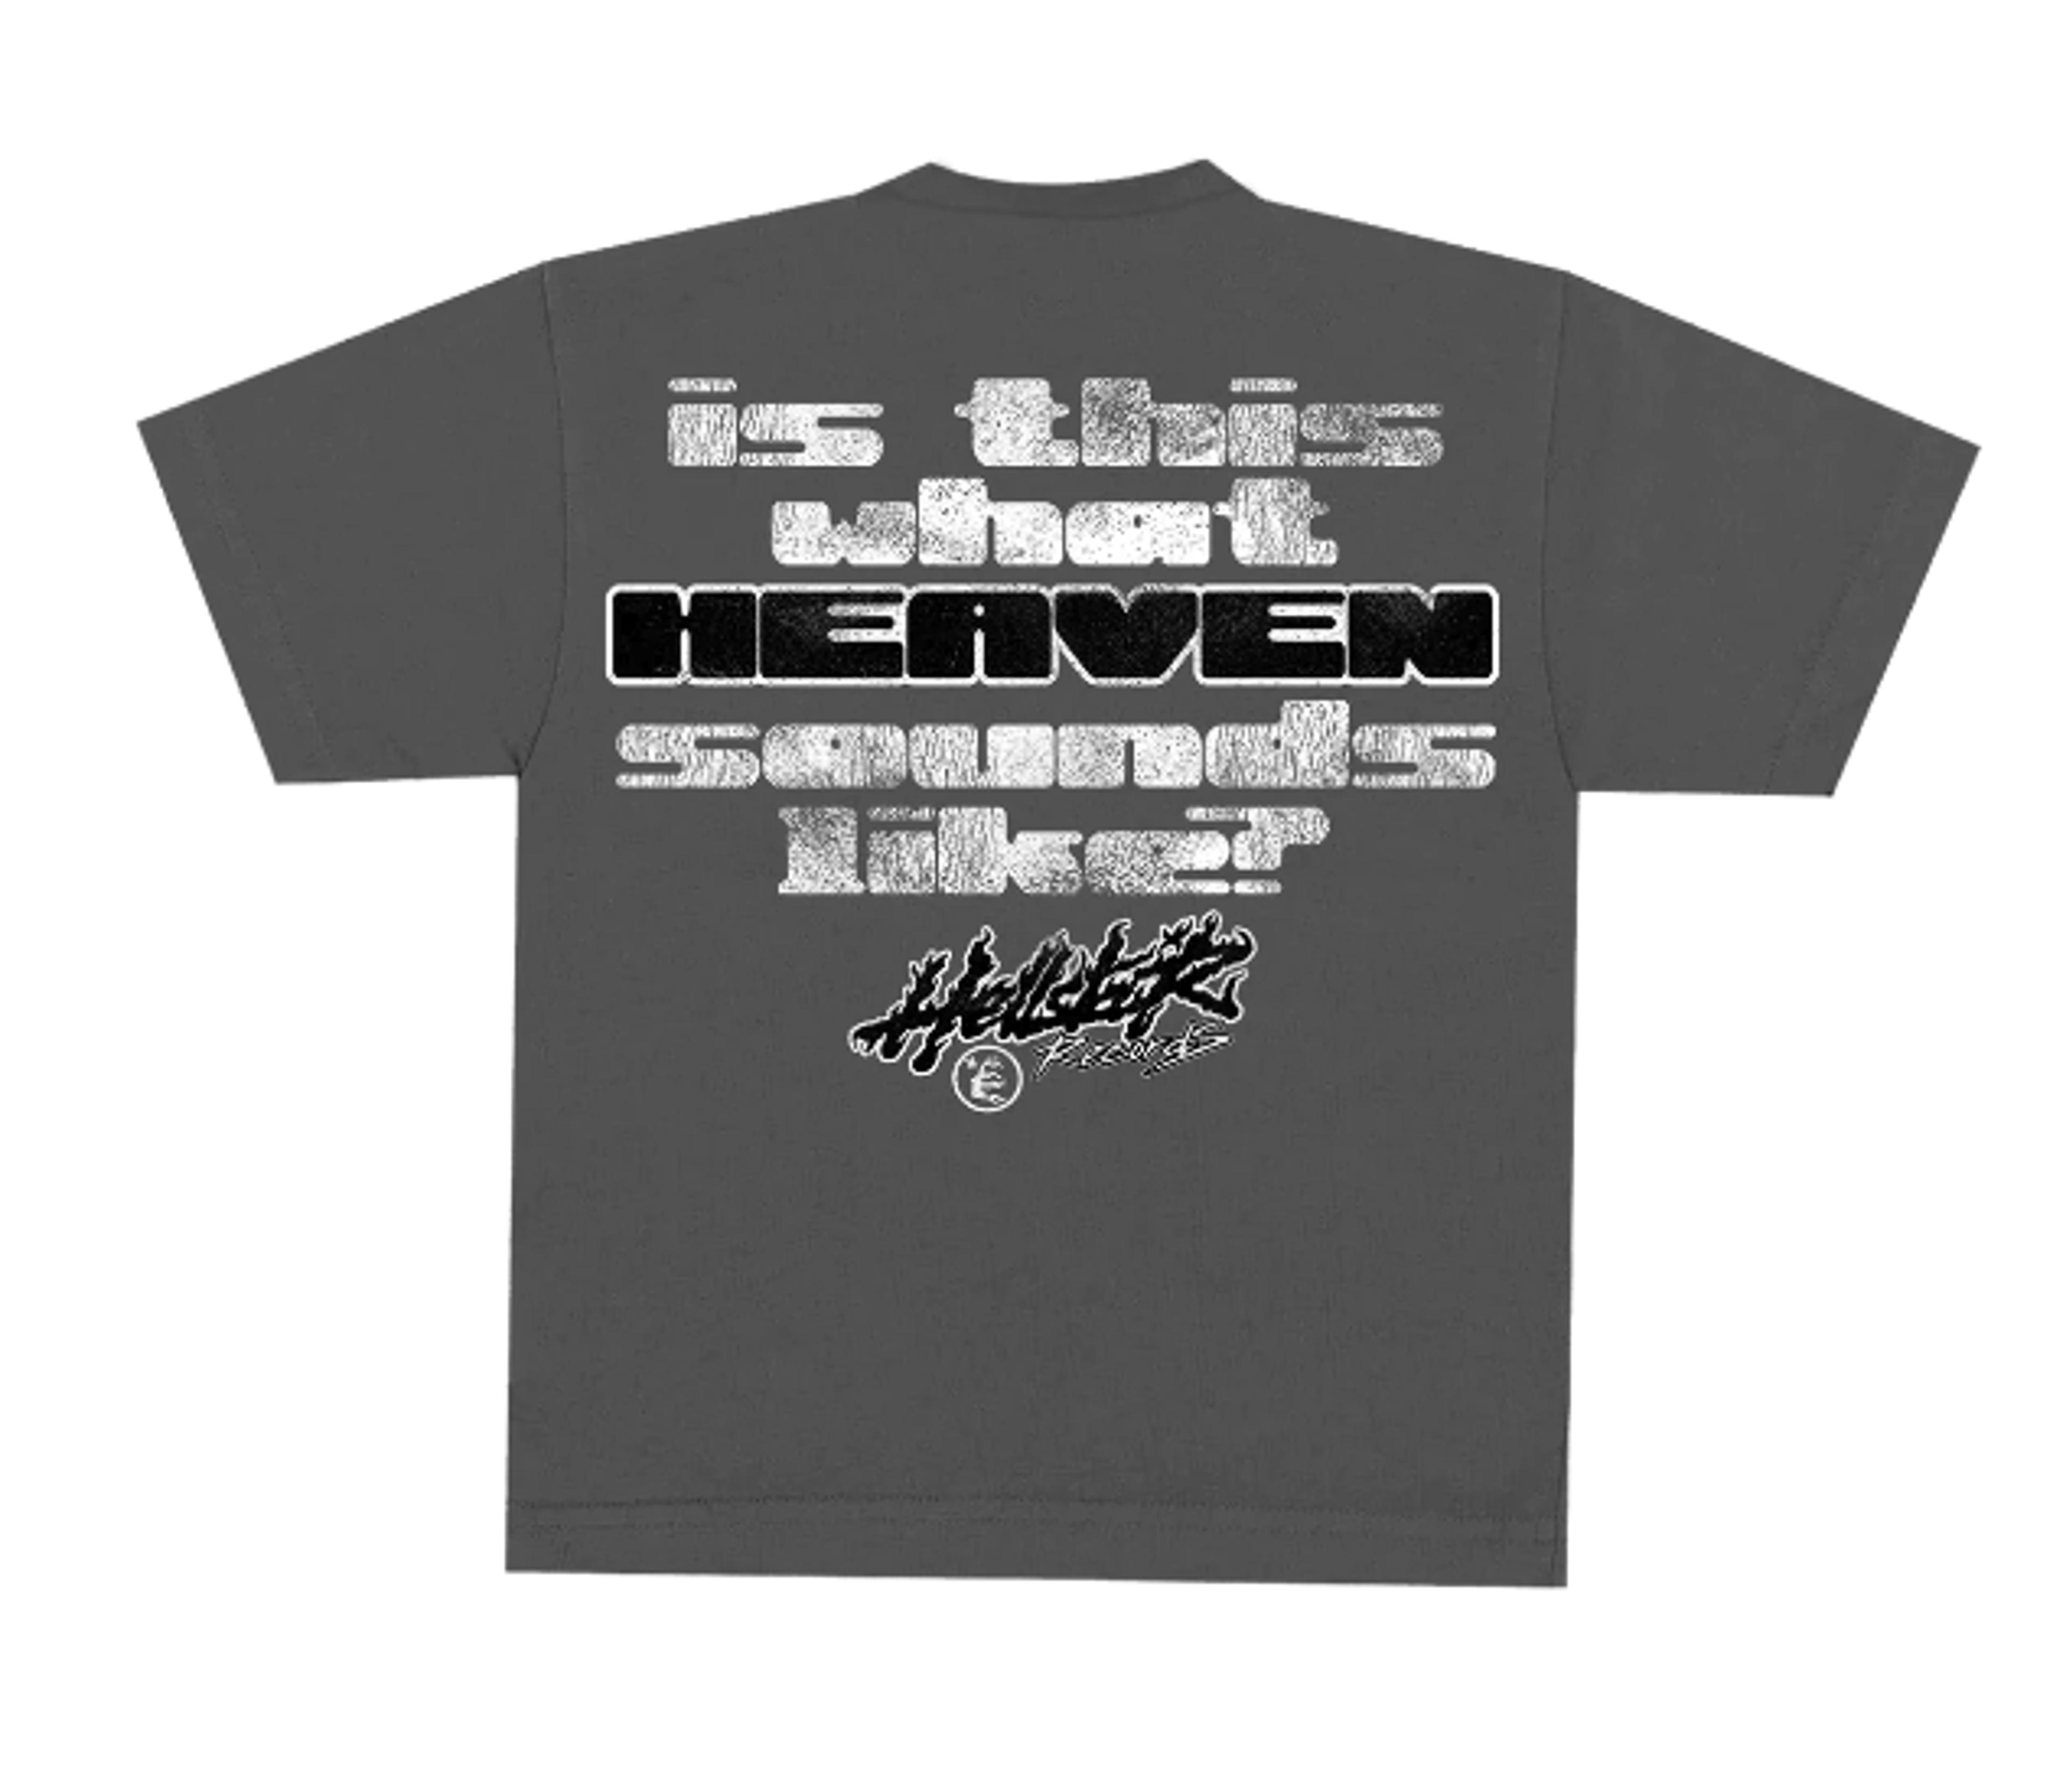 Alternate View 1 of Hellstar Studios Rage Short Sleeve Tee Shirt Black